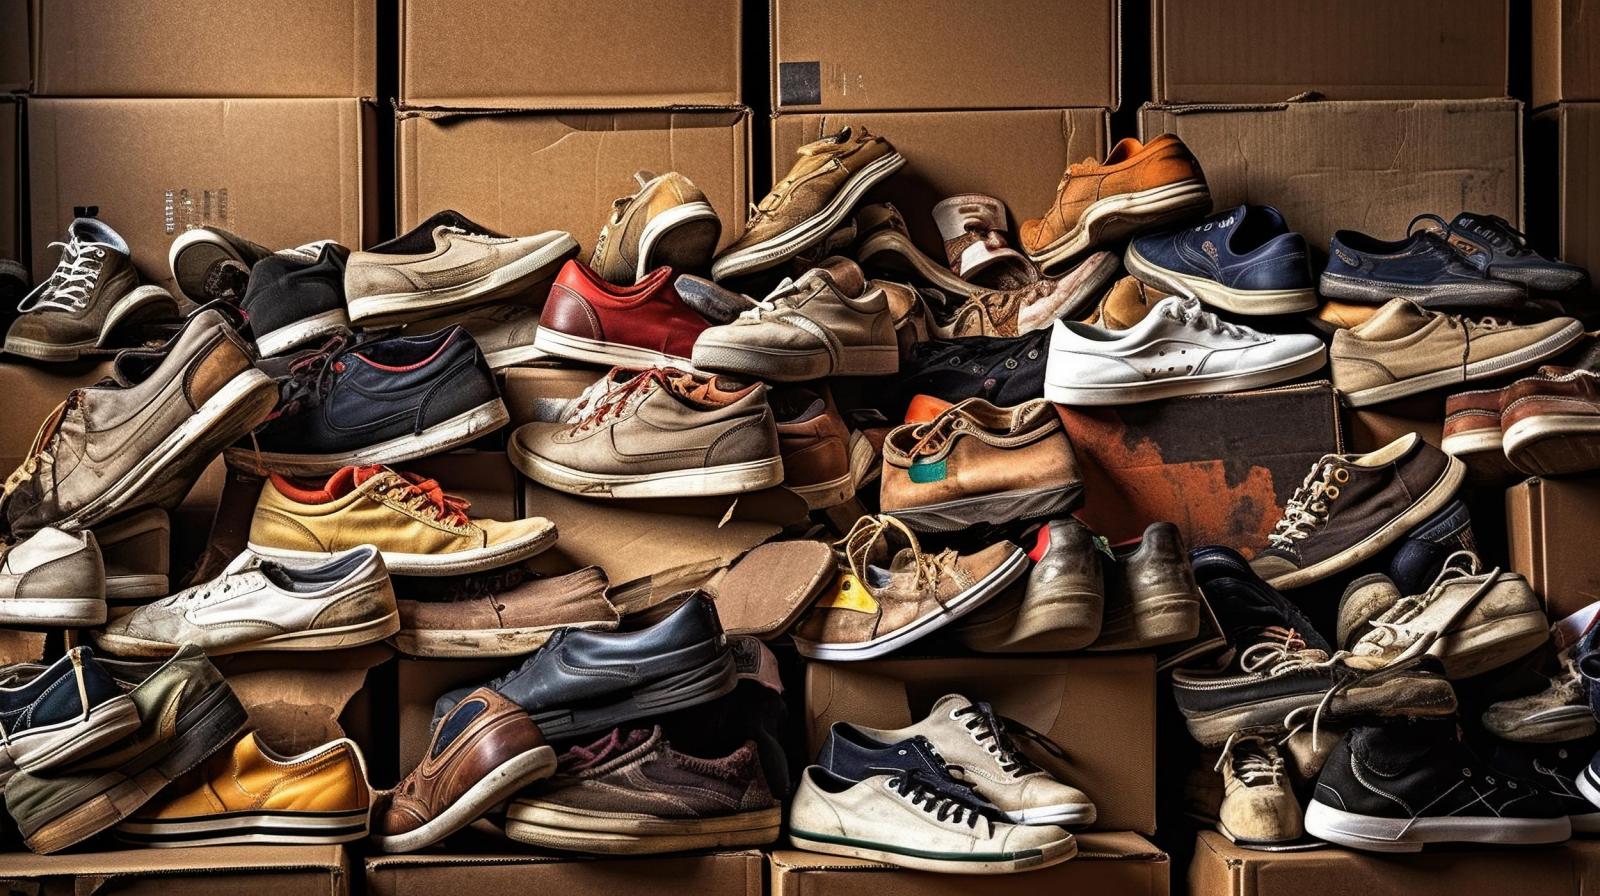 Cumulo di scarpe usate su scatole